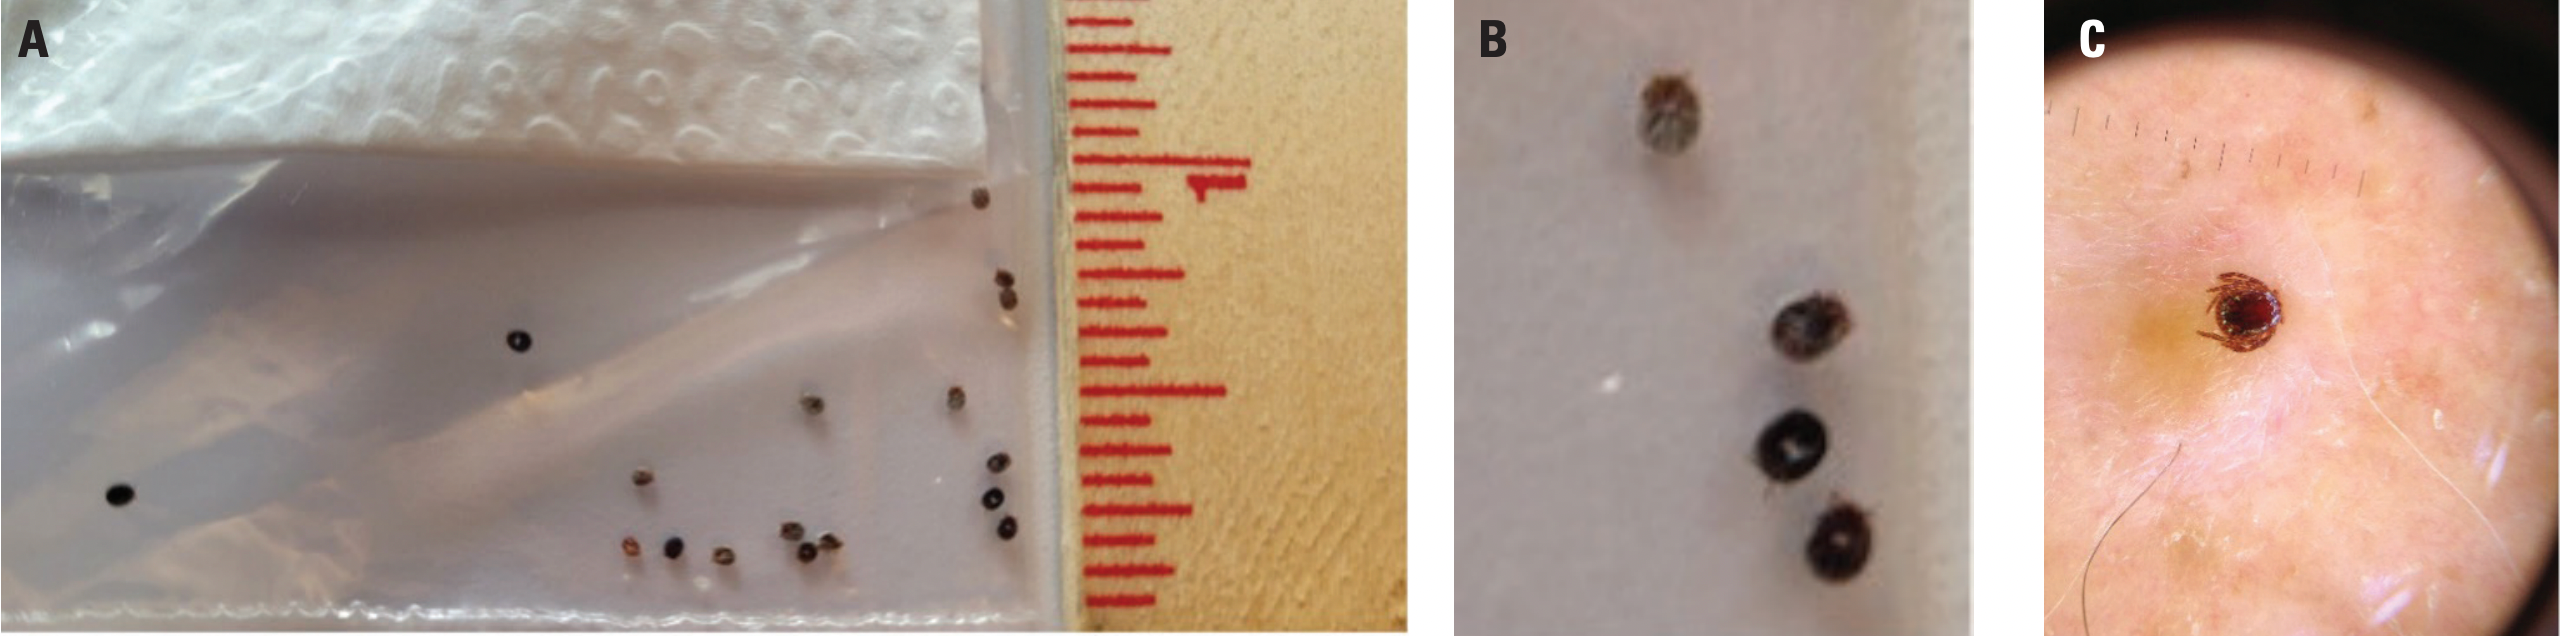 FIGURE 1. A.) Multiple ticks. B. Female ticks. C. Male tick. Click image to enlarge.